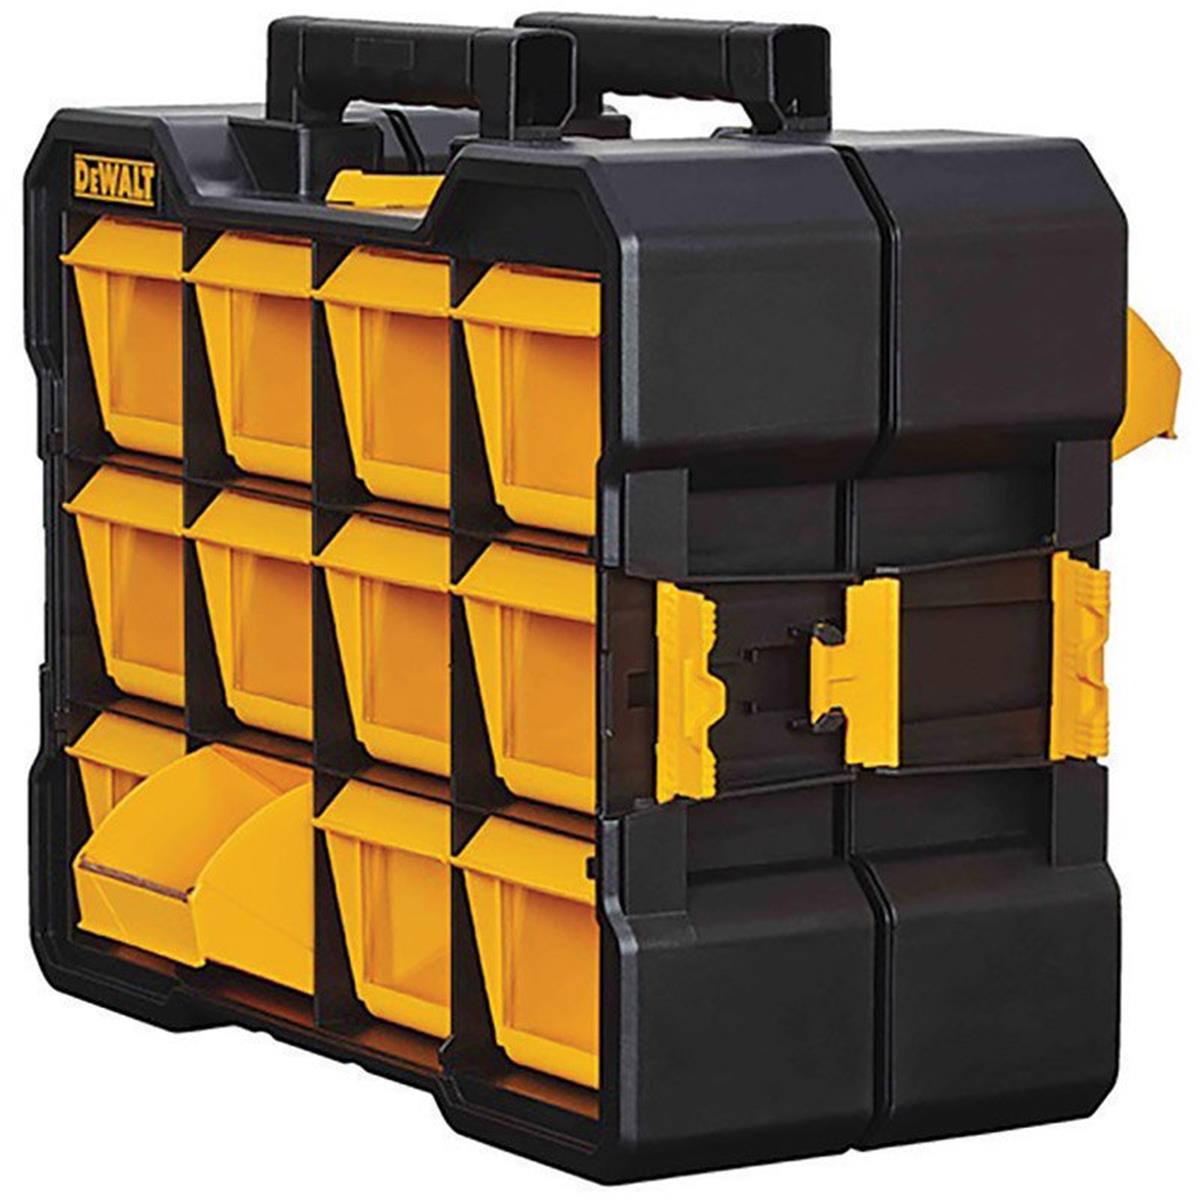 2829539 17.2 X 4.2 X 13.5 In. H Flip Bin Storage Organizer With 12 Compartments, Plastic - Yellow